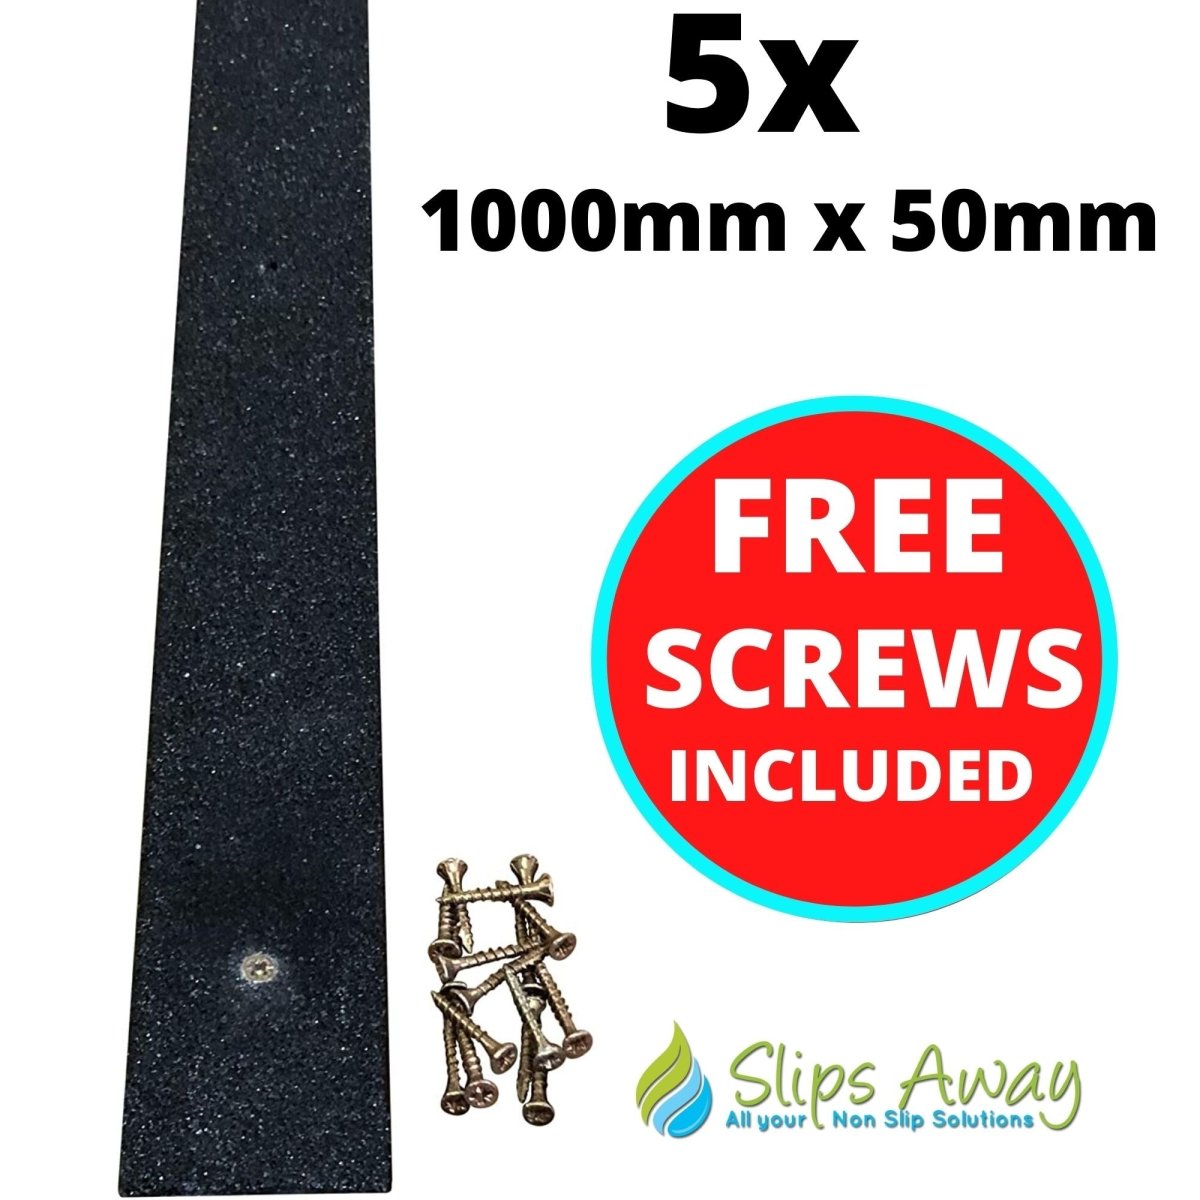 Black Non Slip Decking Strips - Slips Away - decking strip black 1000mm x 50mm 5x pack -